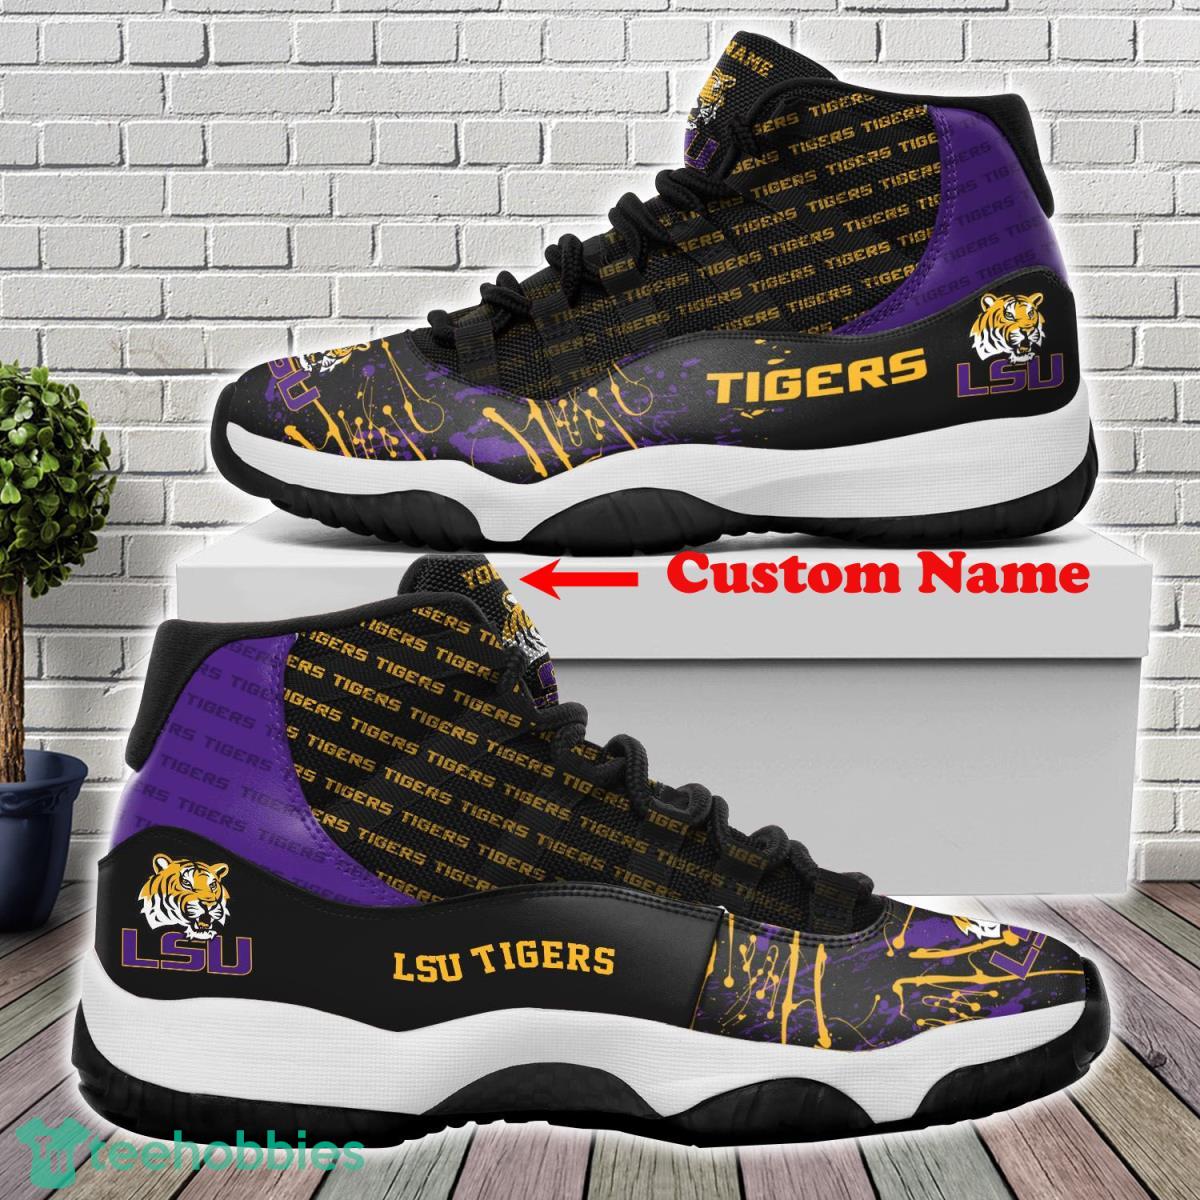 LSU Tigers Custom Name Air Jordan 11 Sneakers For Fans Product Photo 1